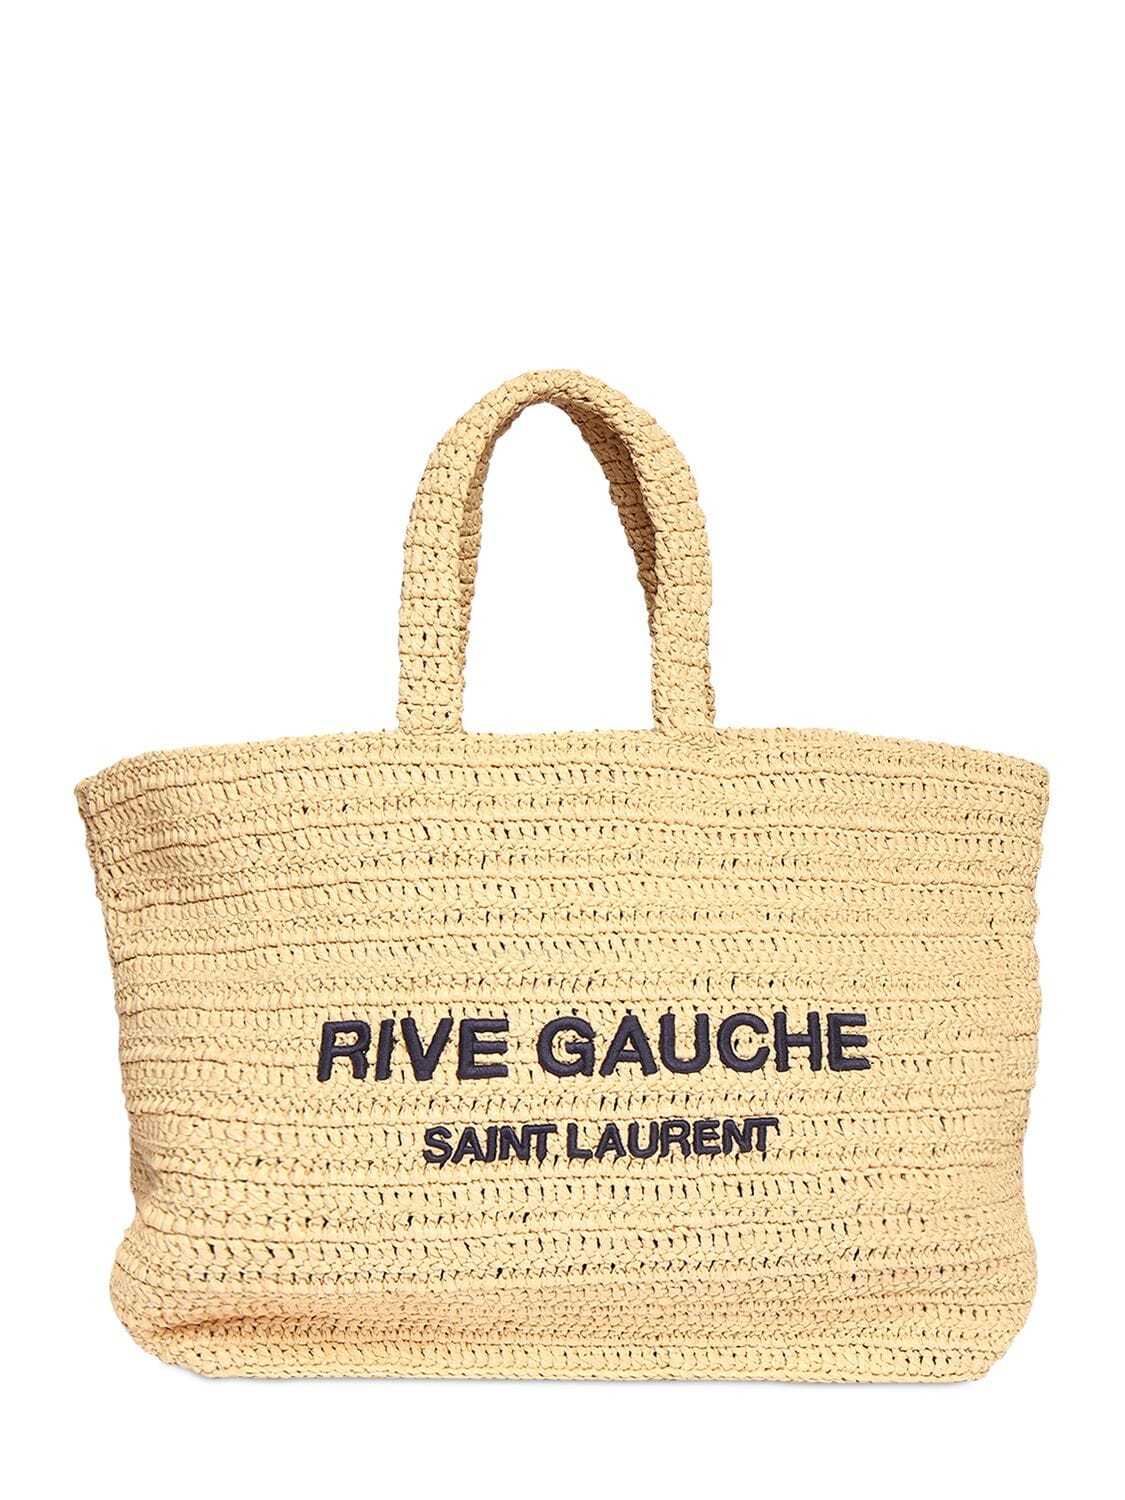 SAINT LAURENT Rive Gauche Printed Raffia Tote Bag